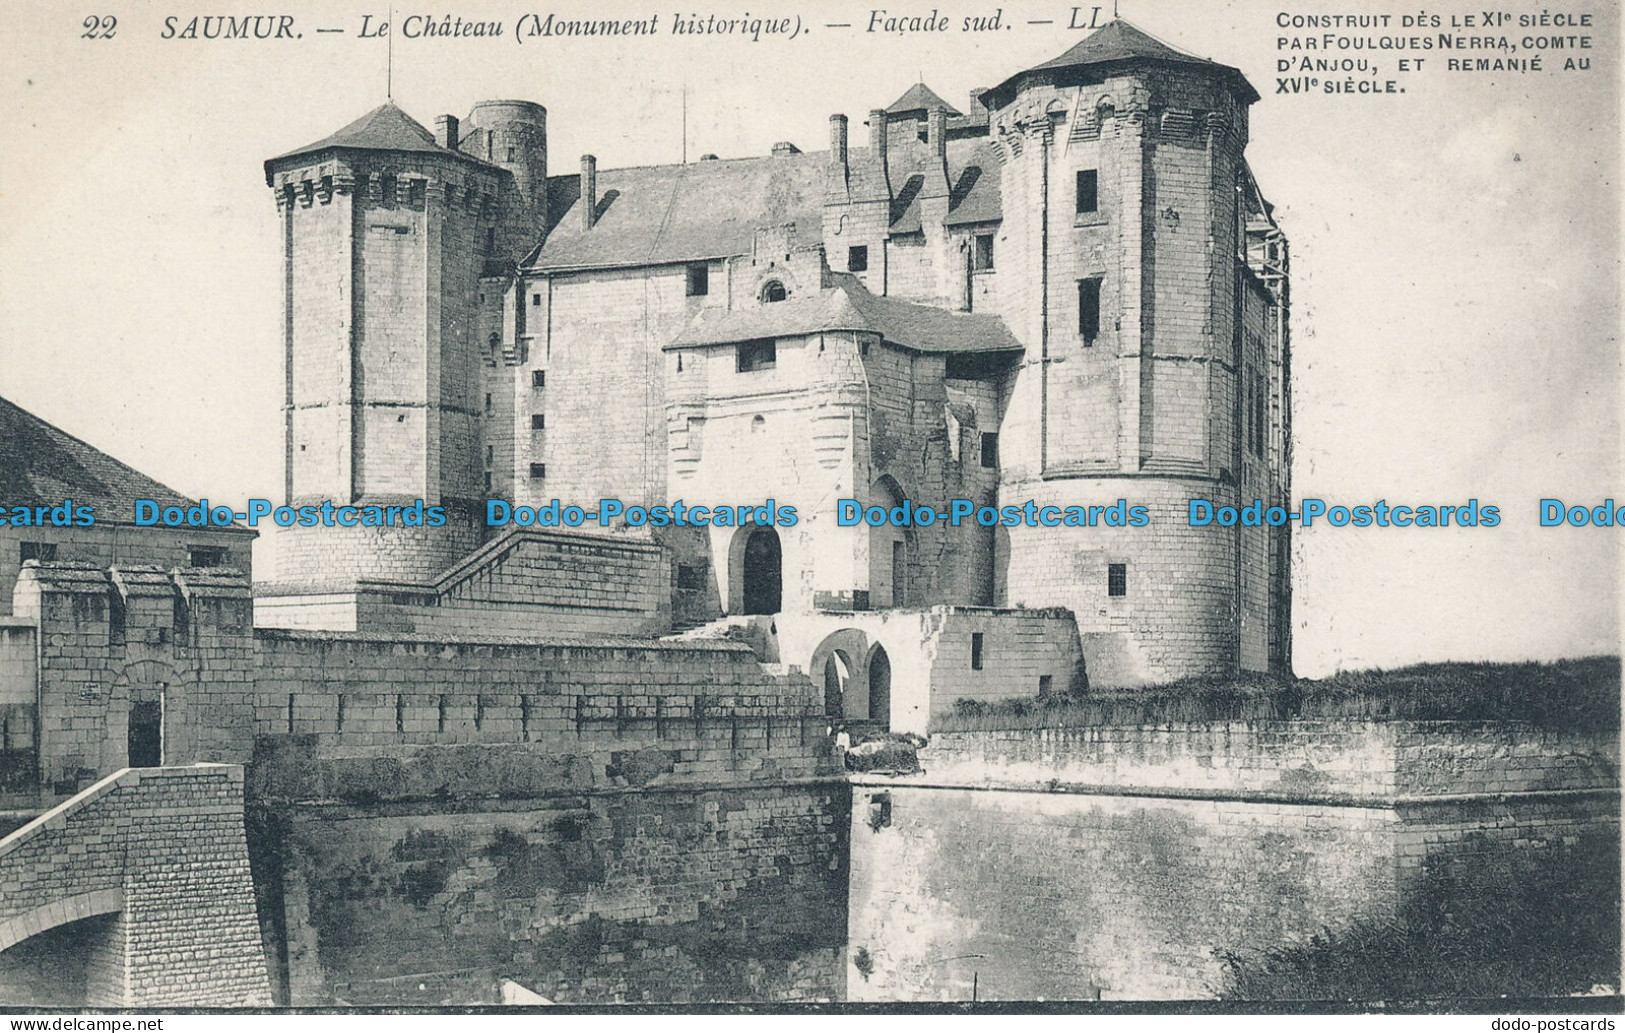 R046917 Saumur. Le Chateau. Facade Sud. LL. No 22 - Monde